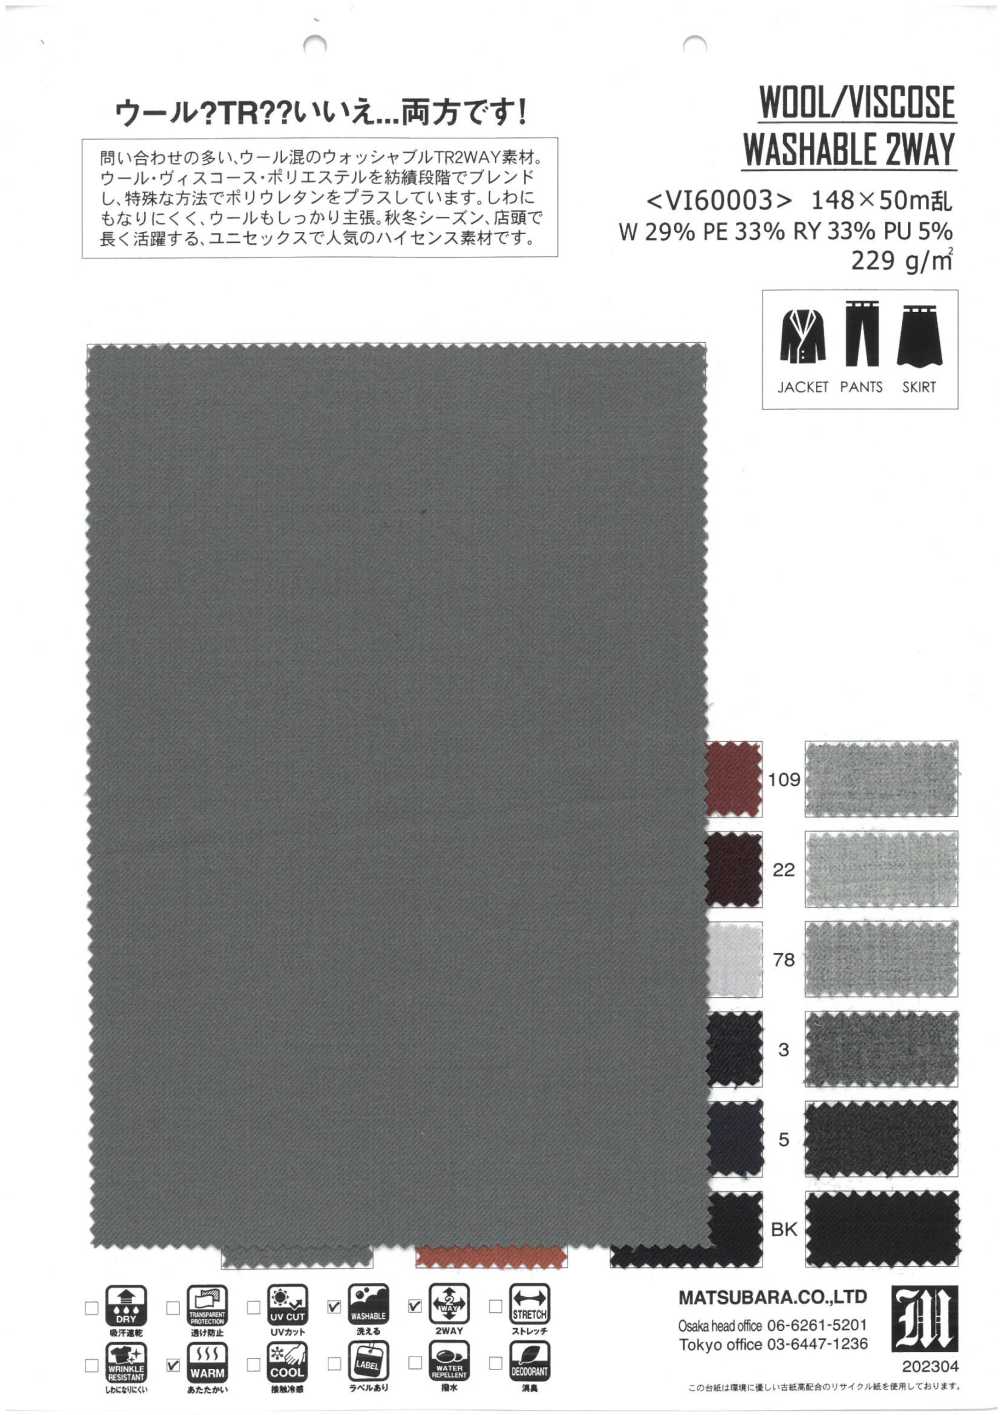 VI60003 WOLLE/VISKOSE WASCHBAR 2-WEGE[Textilgewebe] Matsubara